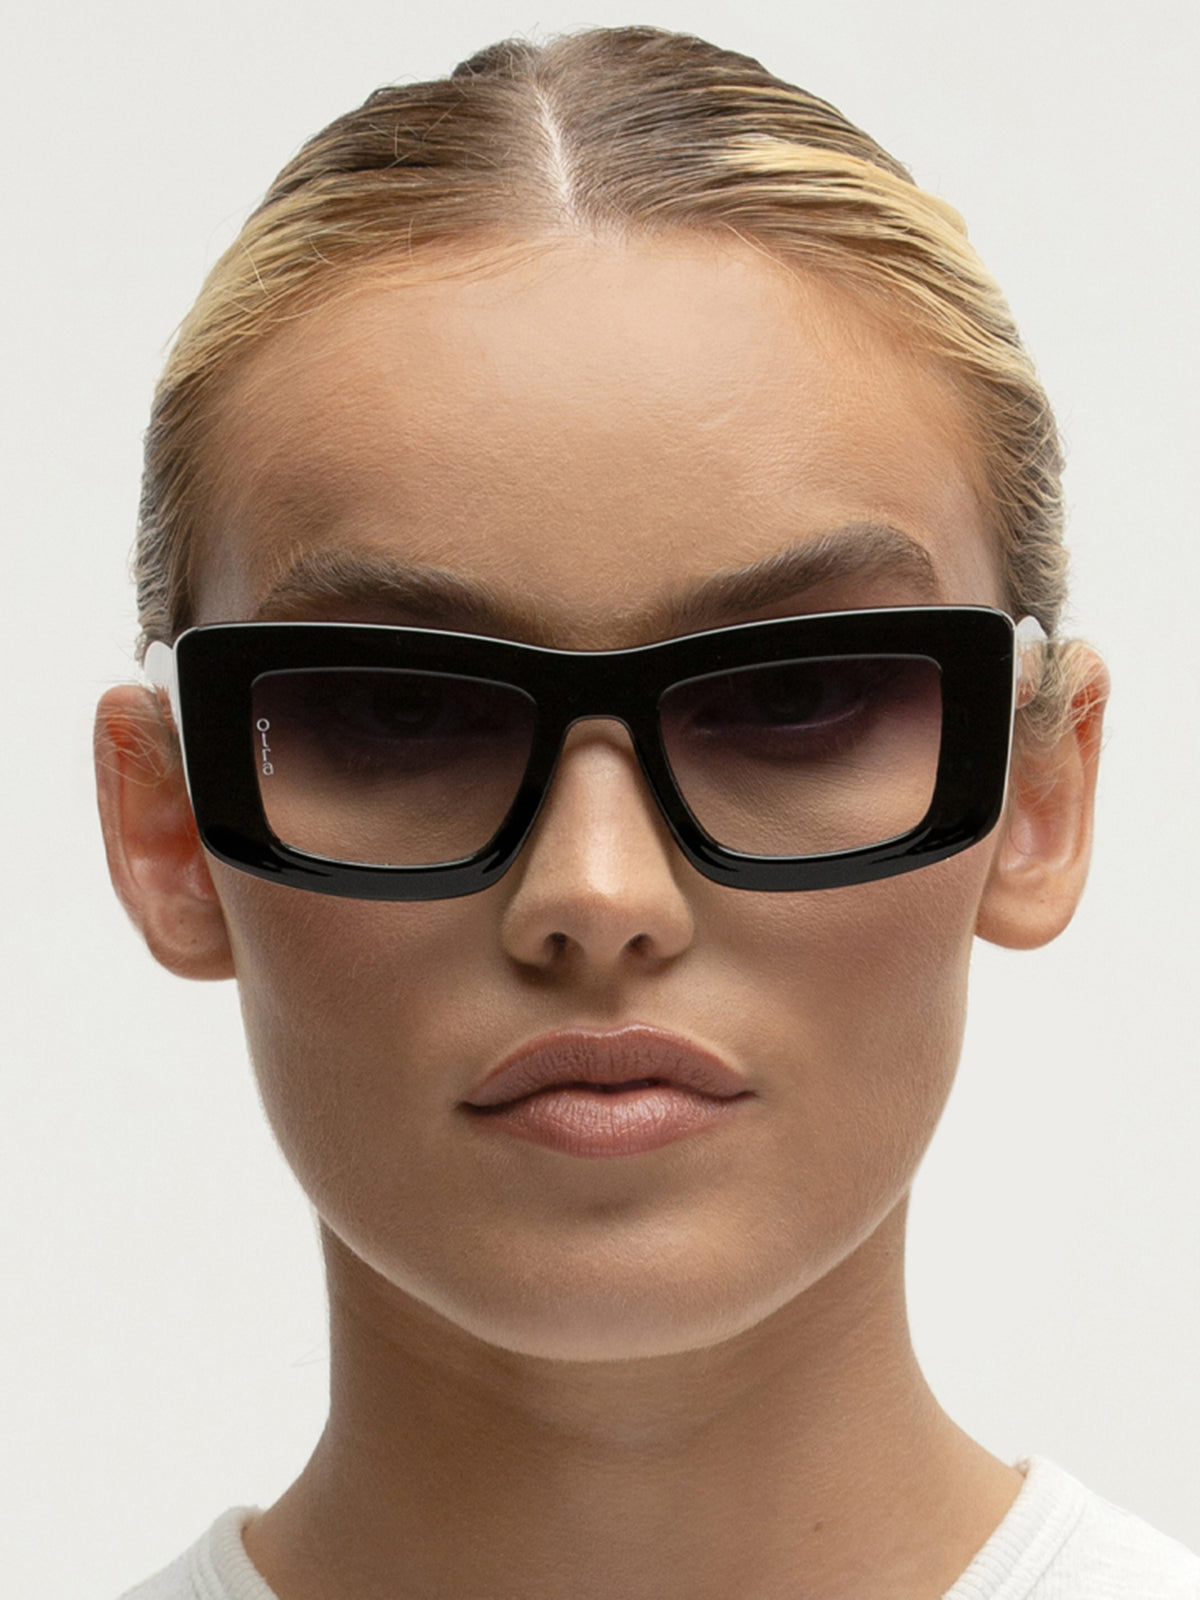 Marsha Sunglasses in Black &amp; Smoke Fade